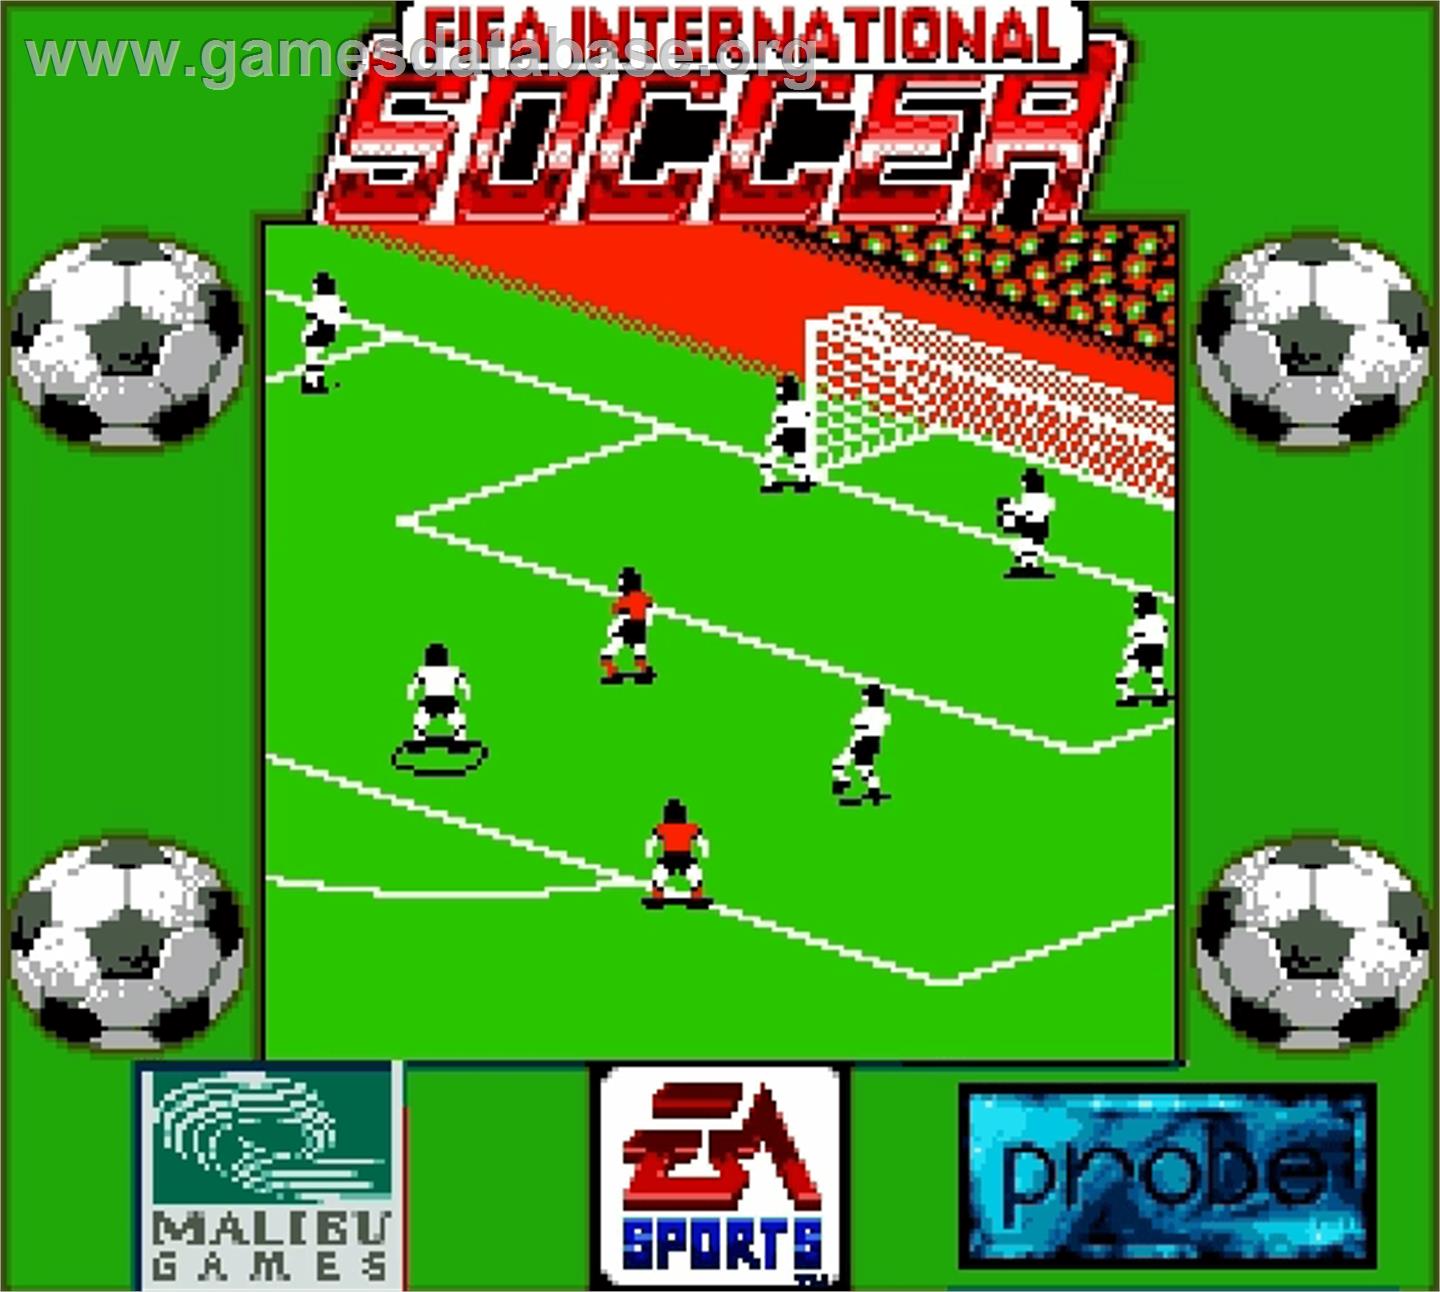 FIFA International Soccer - Nintendo Super Gameboy - Artwork - In Game